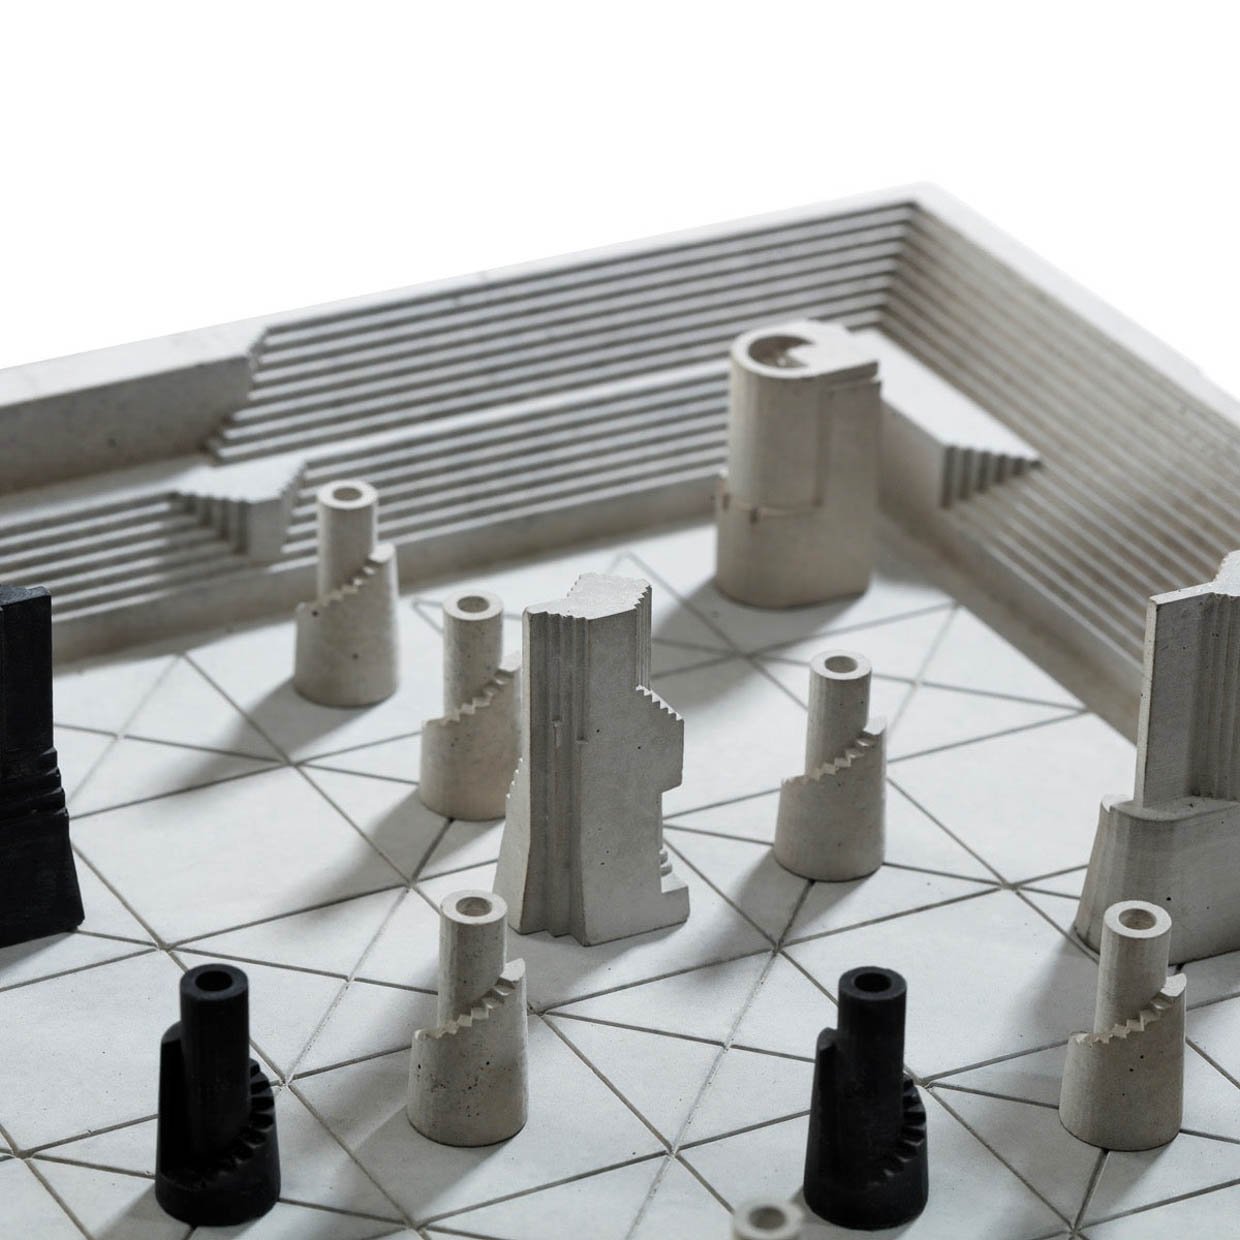 Arena Concrete Chess Set